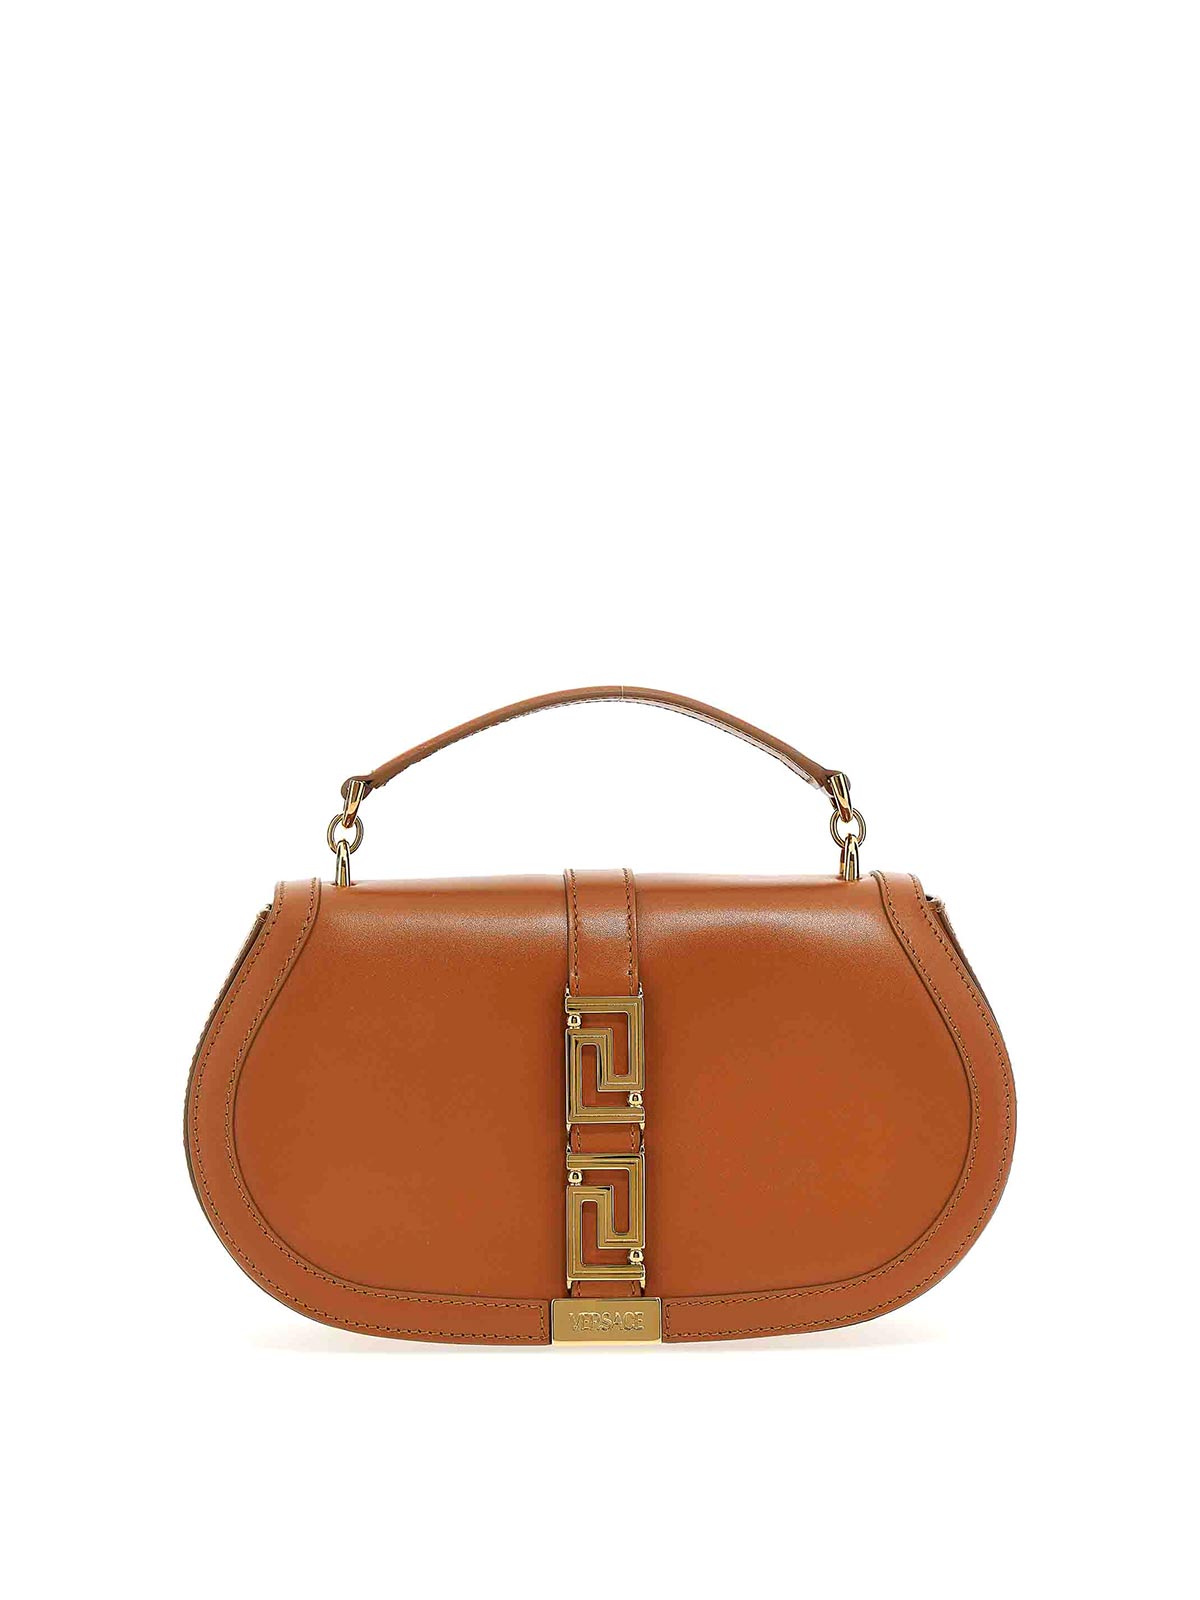 Versace Handbag In Brown